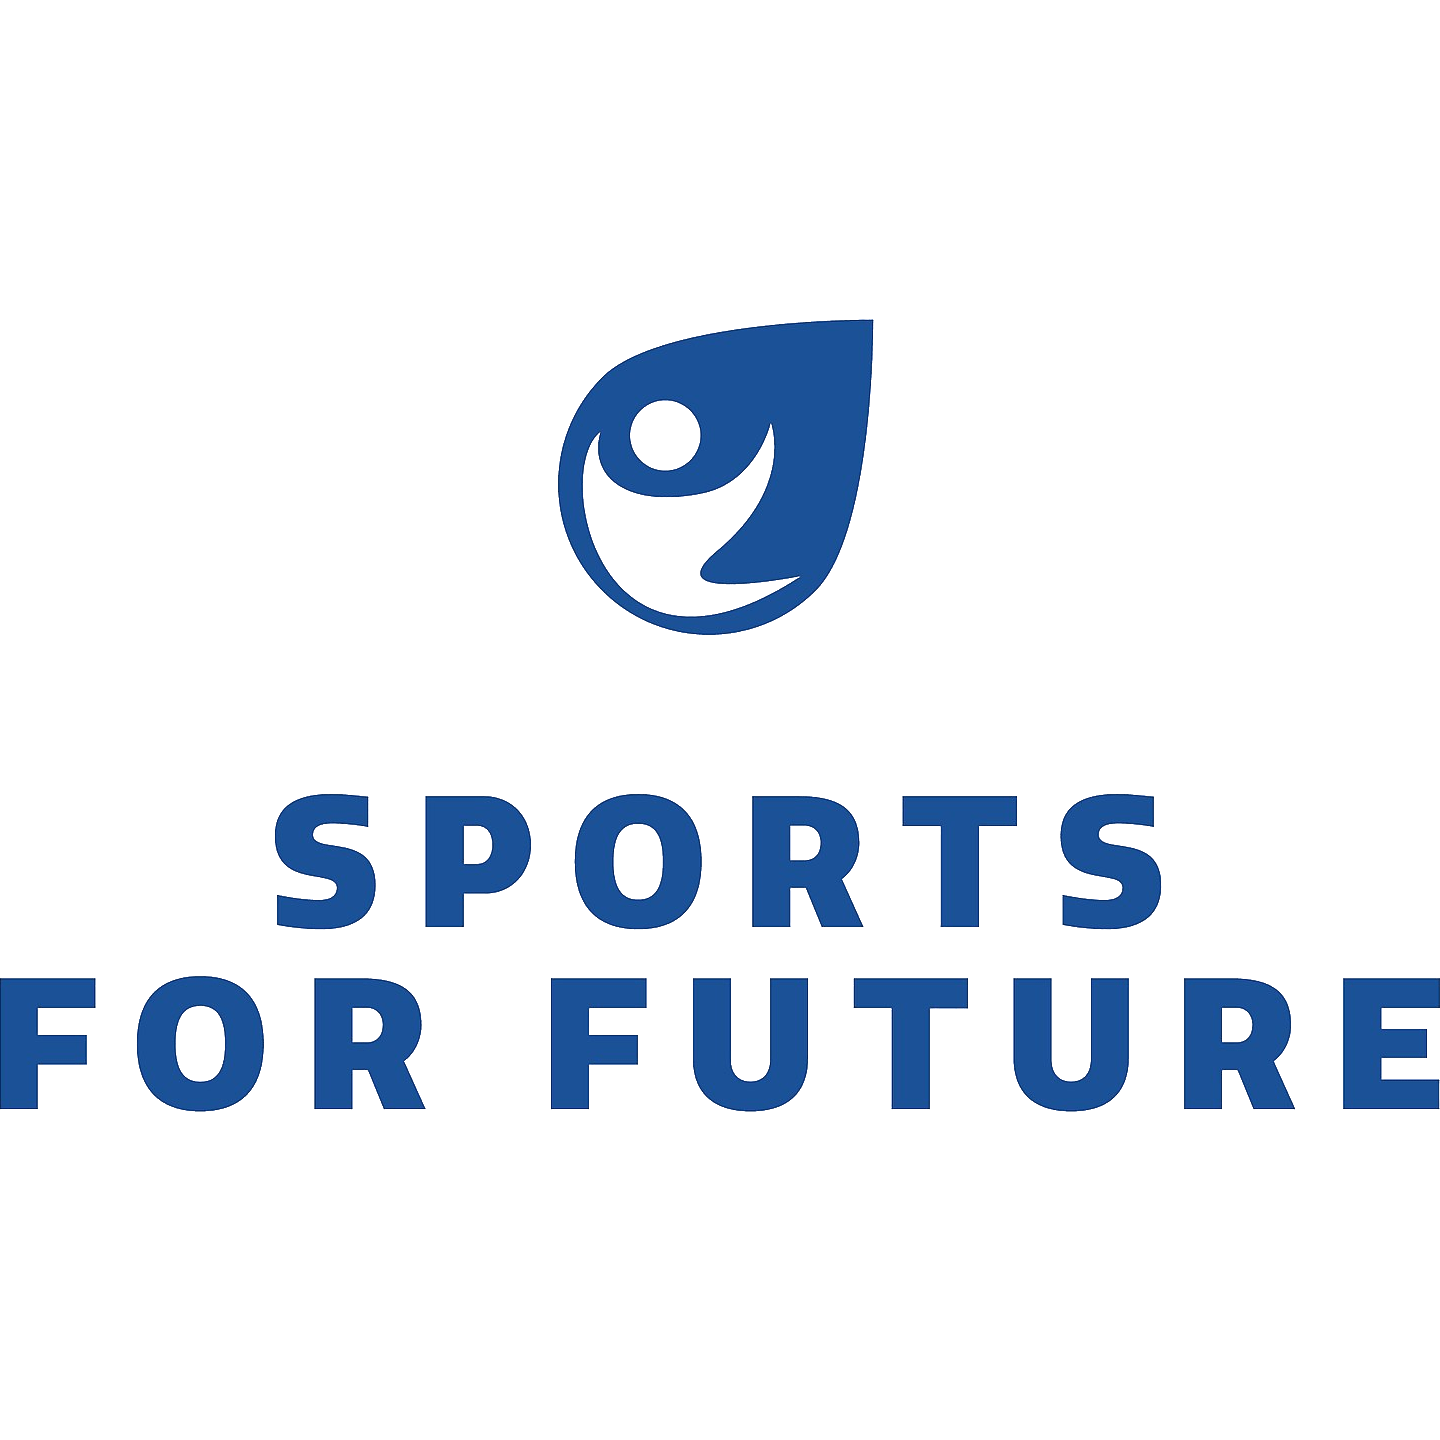 Sports For Future